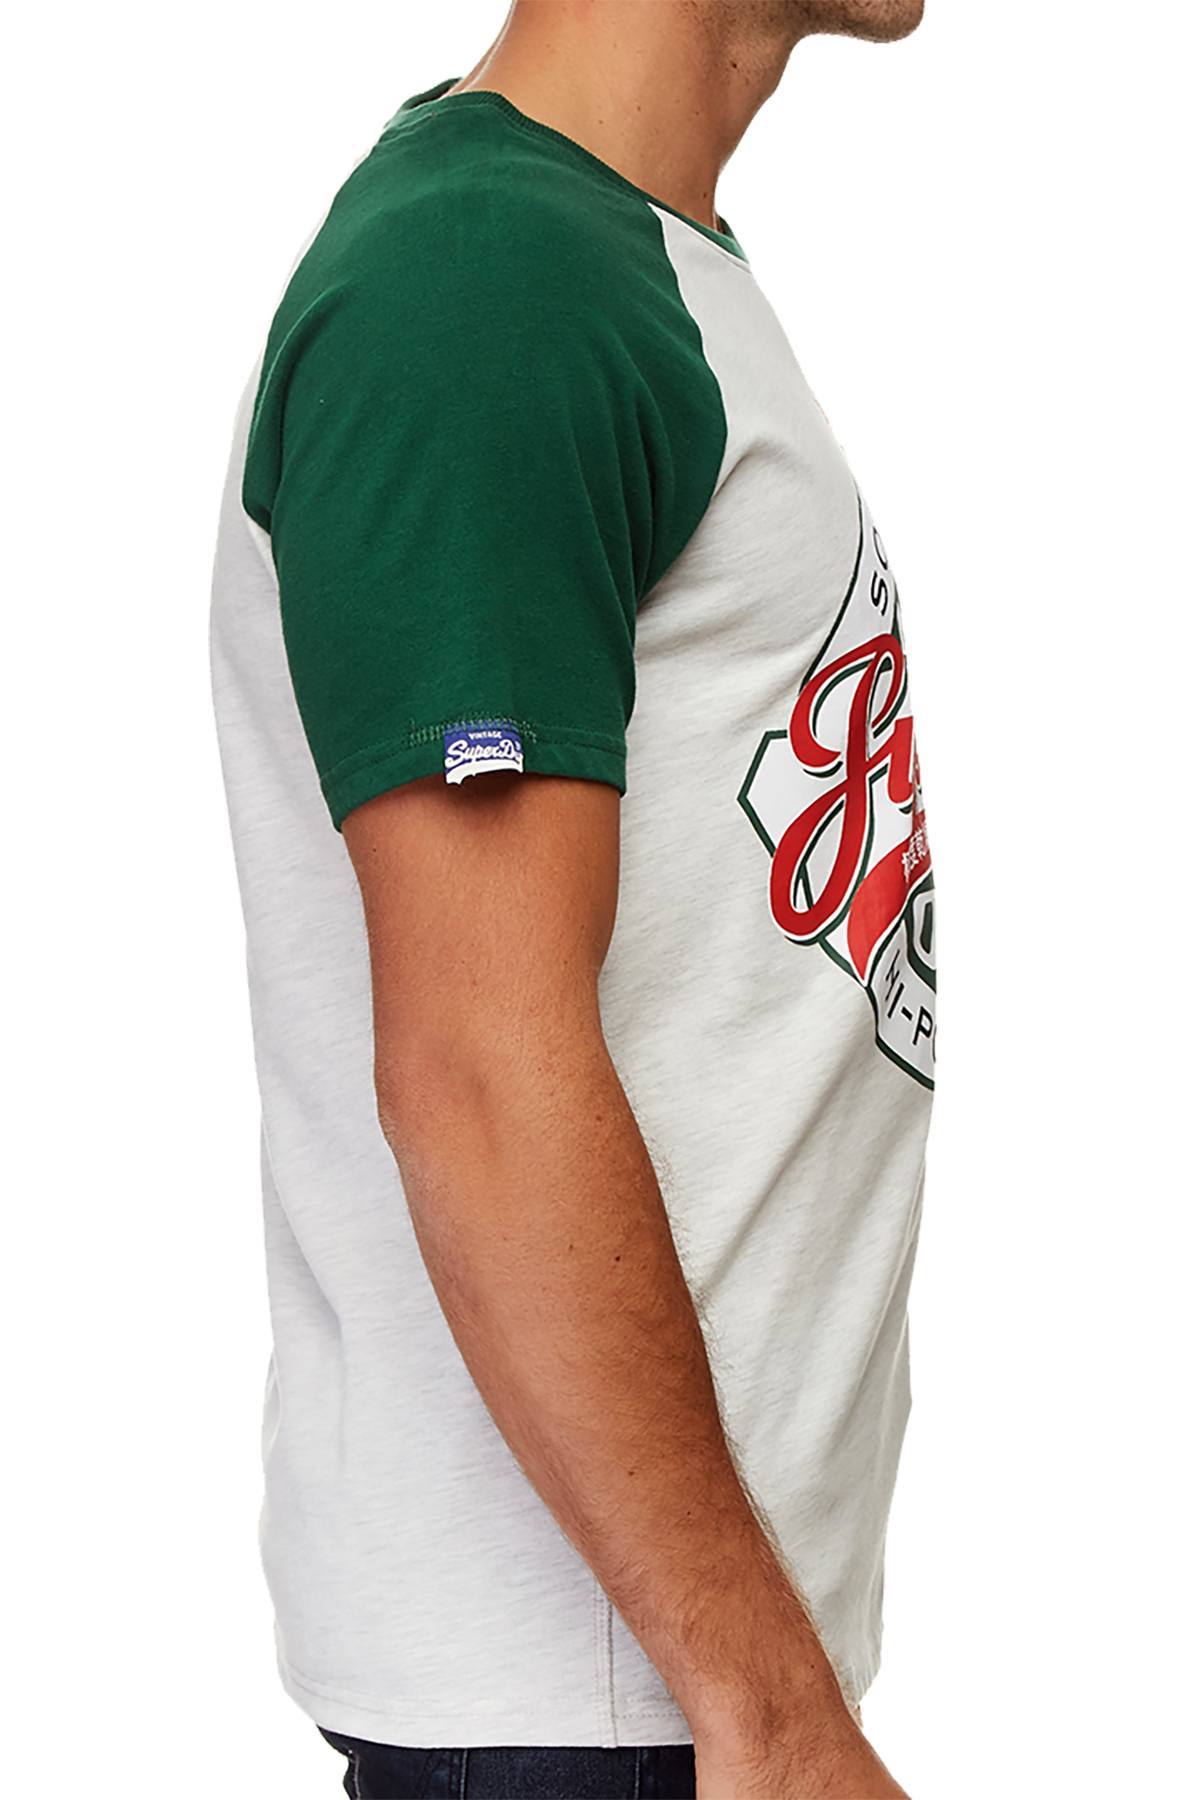 SuperDry Slam-Dunk-Green/Stadium-Silver Reworked Classic Raglan T-Shirt